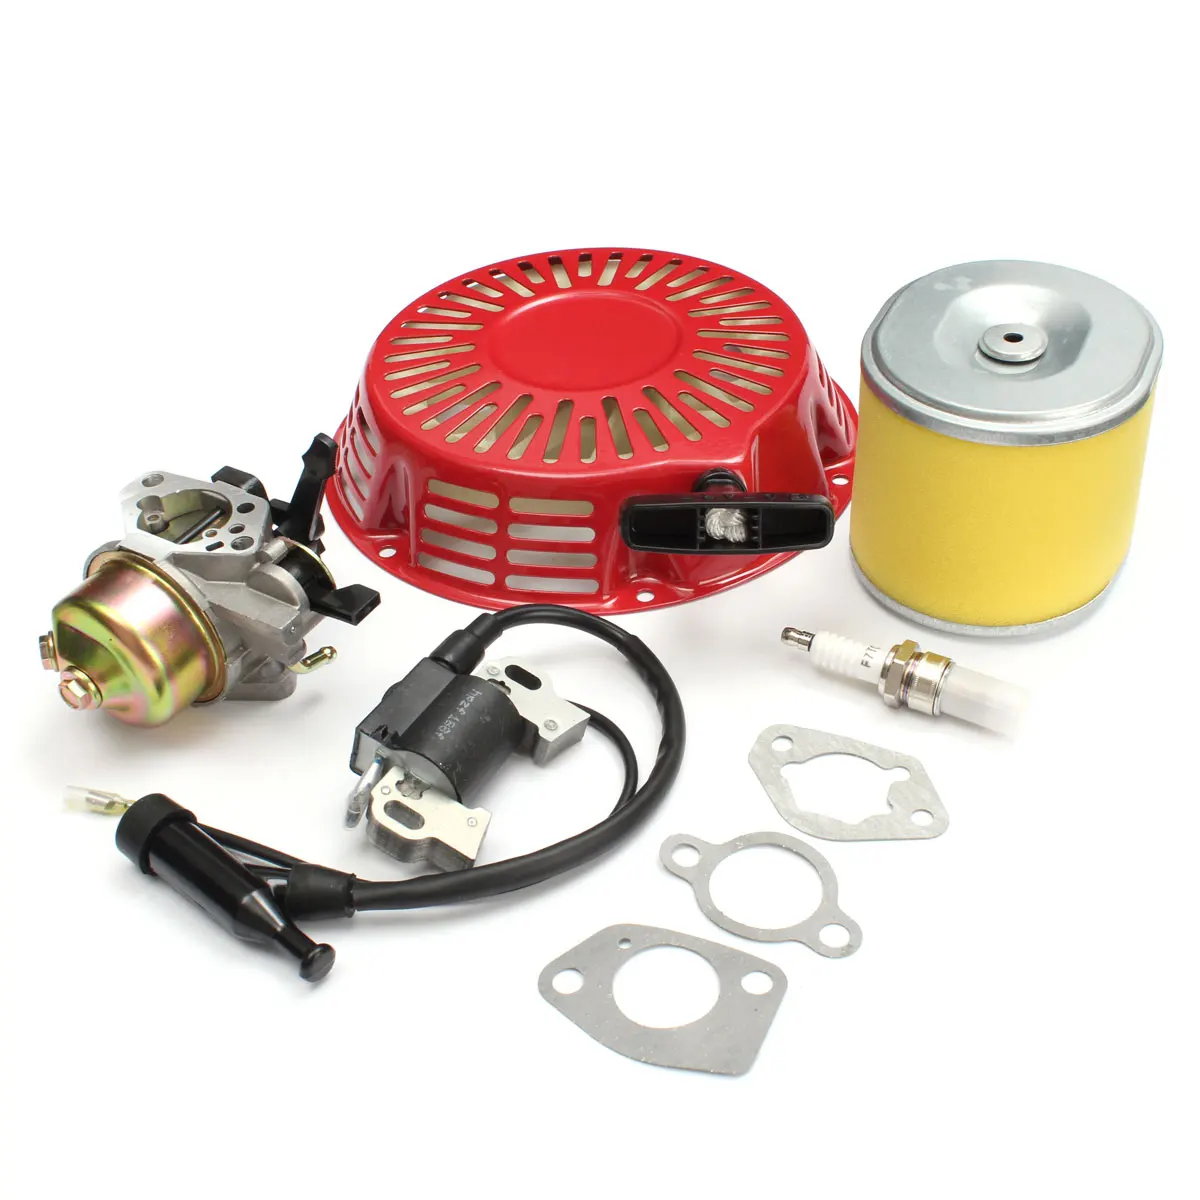 

Recoil Filter Carburetor Ignition Coil Plug Kit For Honda GX340 11HP GX390 13HP Engine Kit